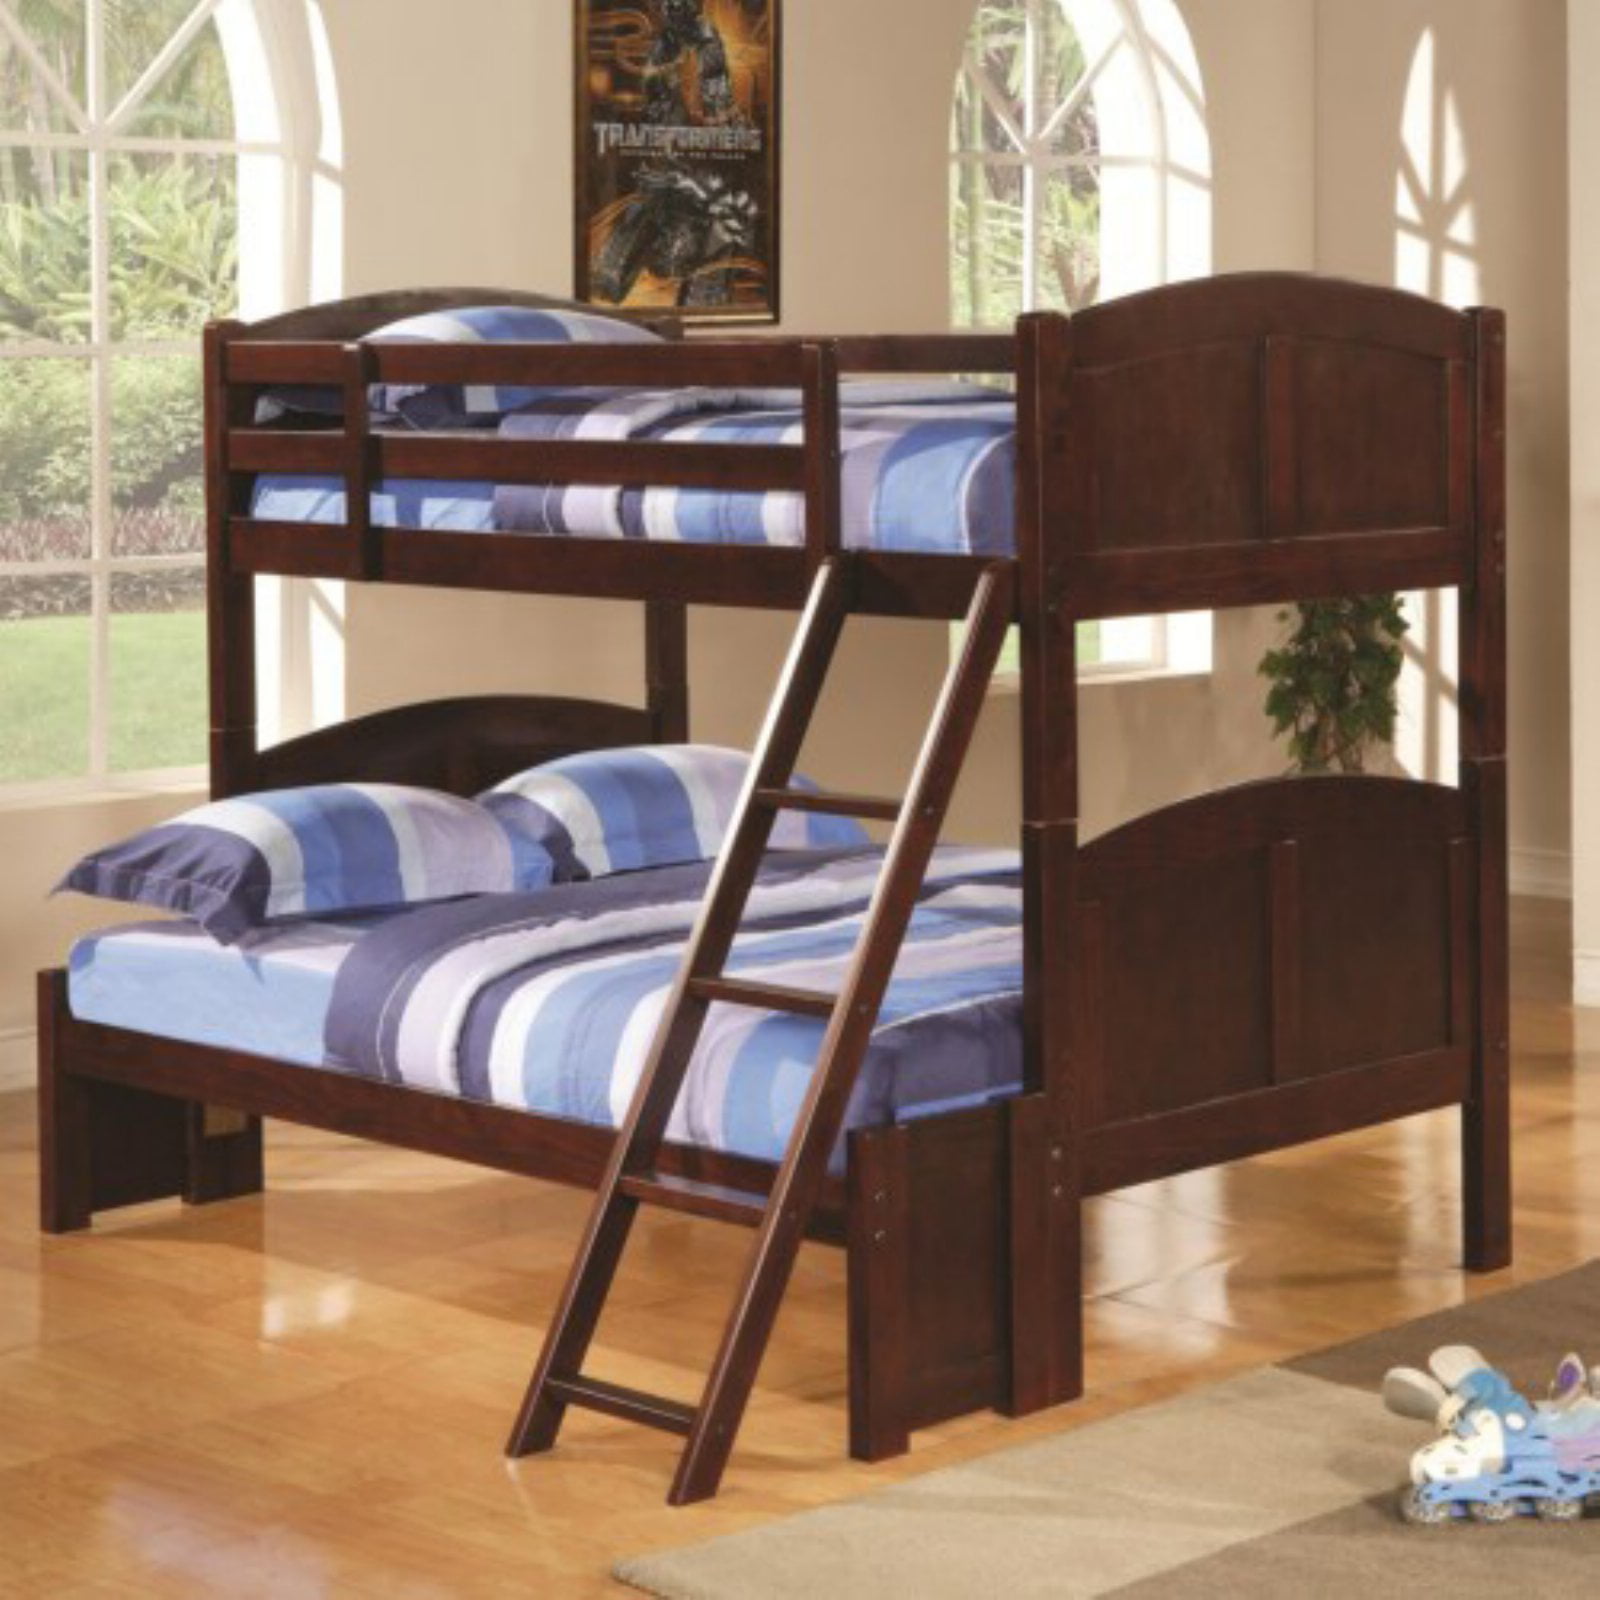 Coaster Furniture Coronado Twin Over, Coronado Furniture Bunk Bed